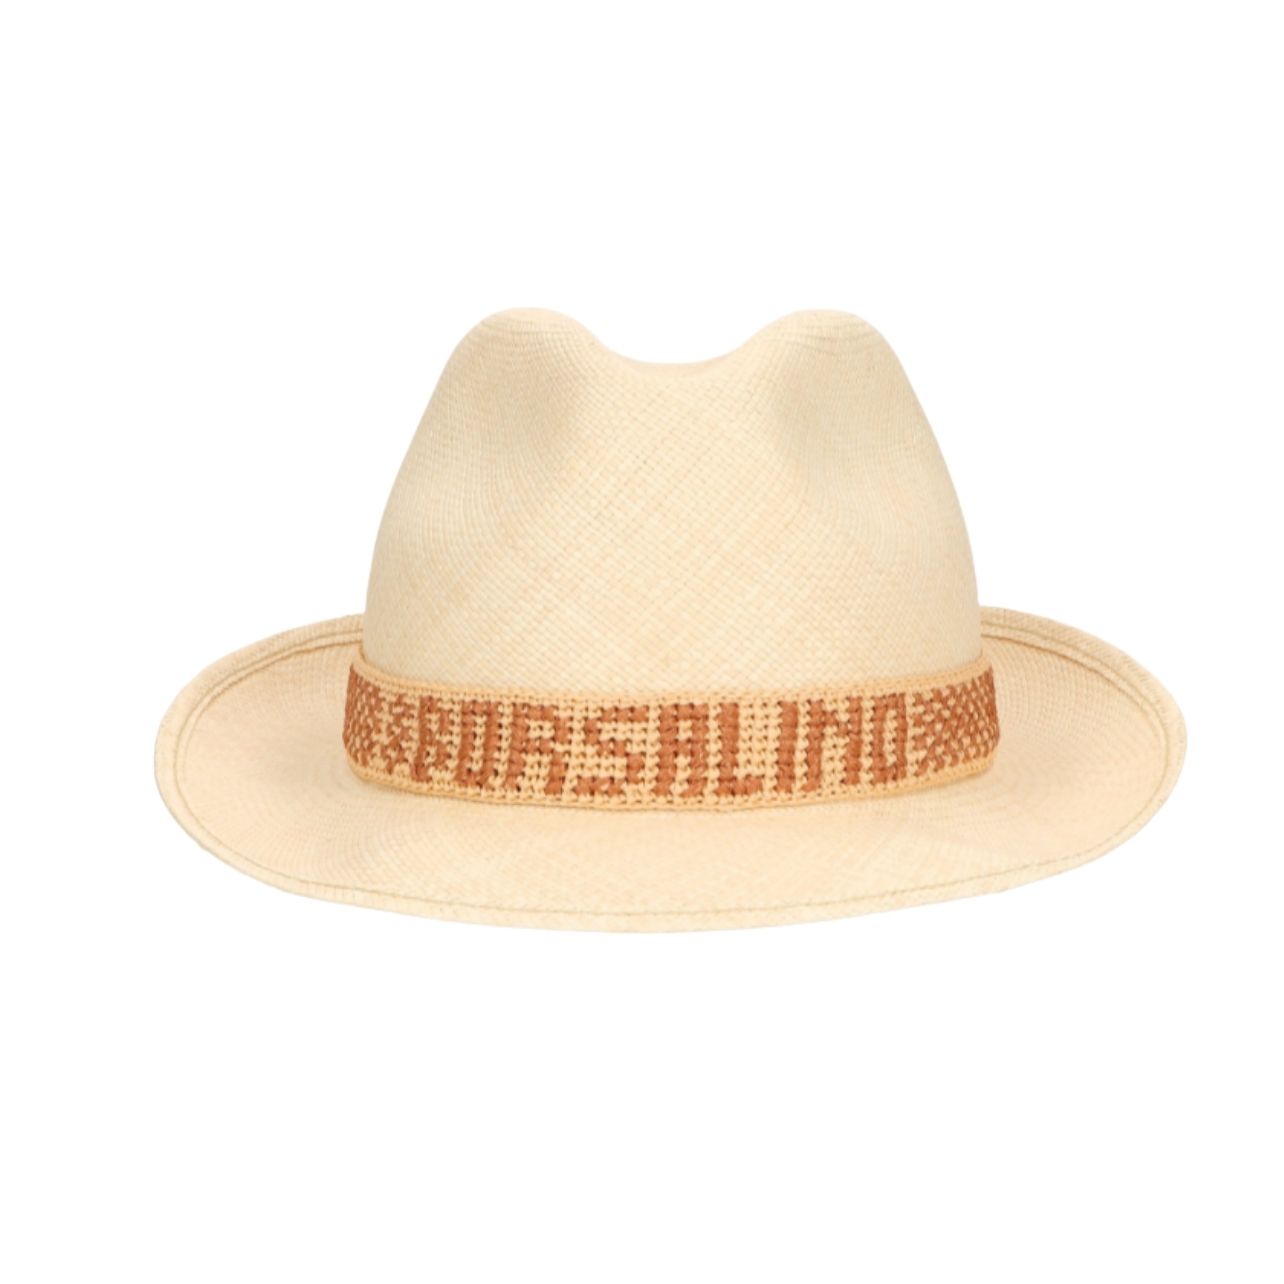 Straw hat with “Borsalino” printed on the brim